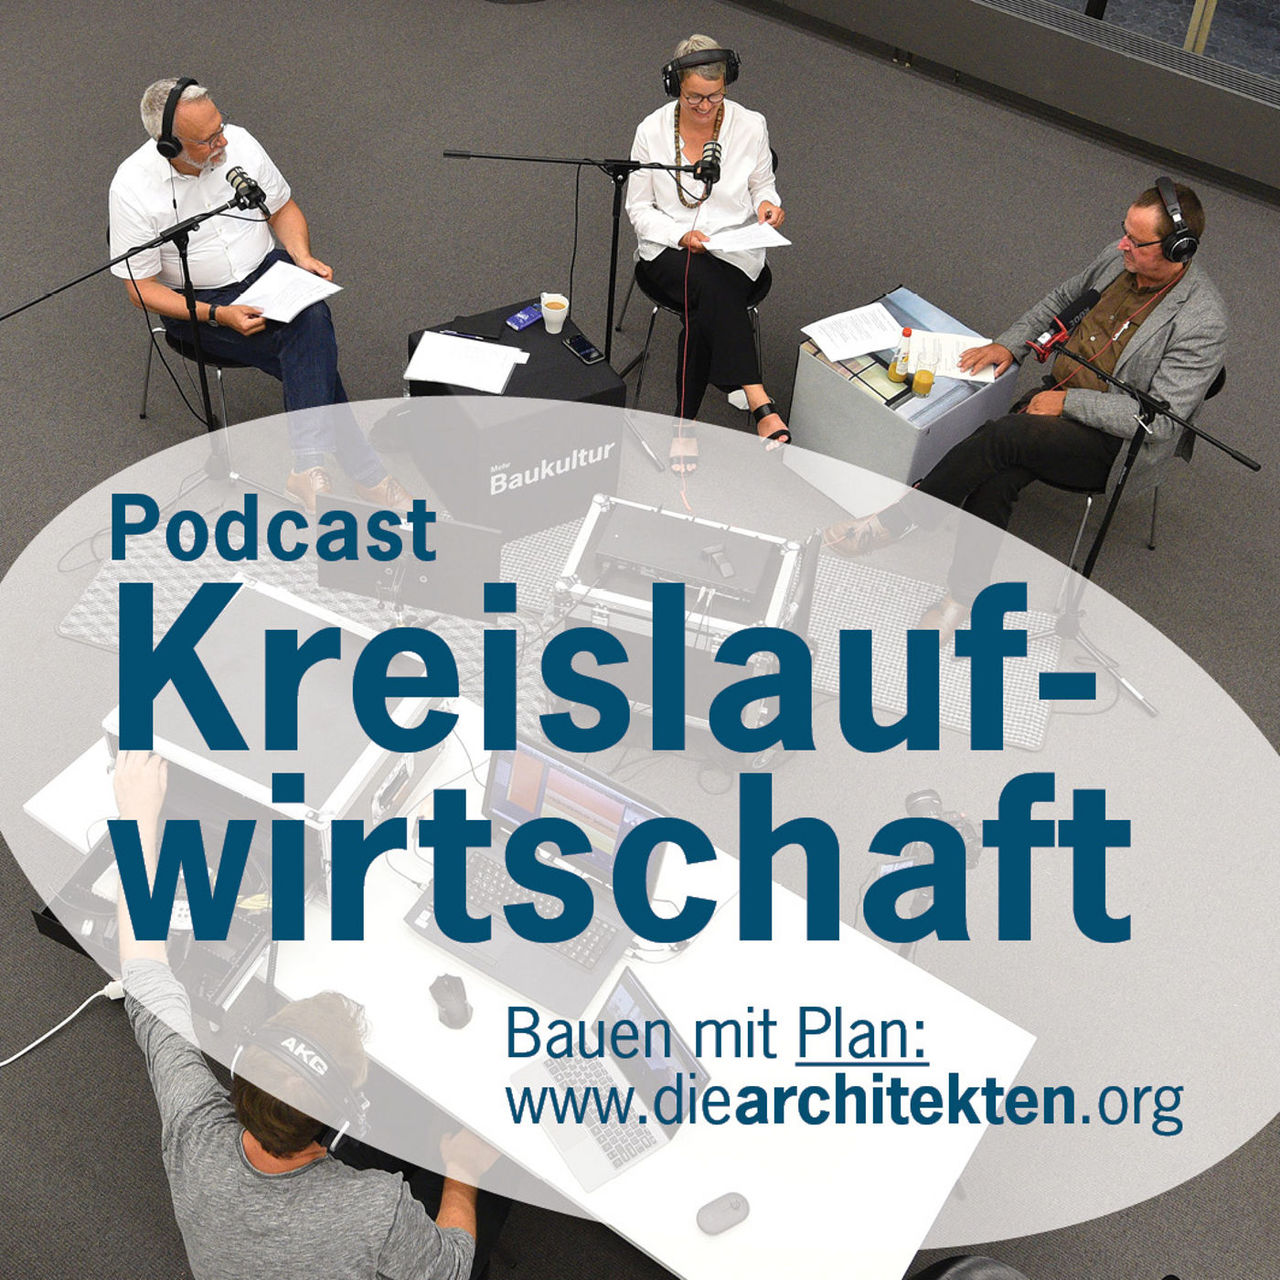 Podcast-Aufnahme im Zentrum Baukultur in Mainz